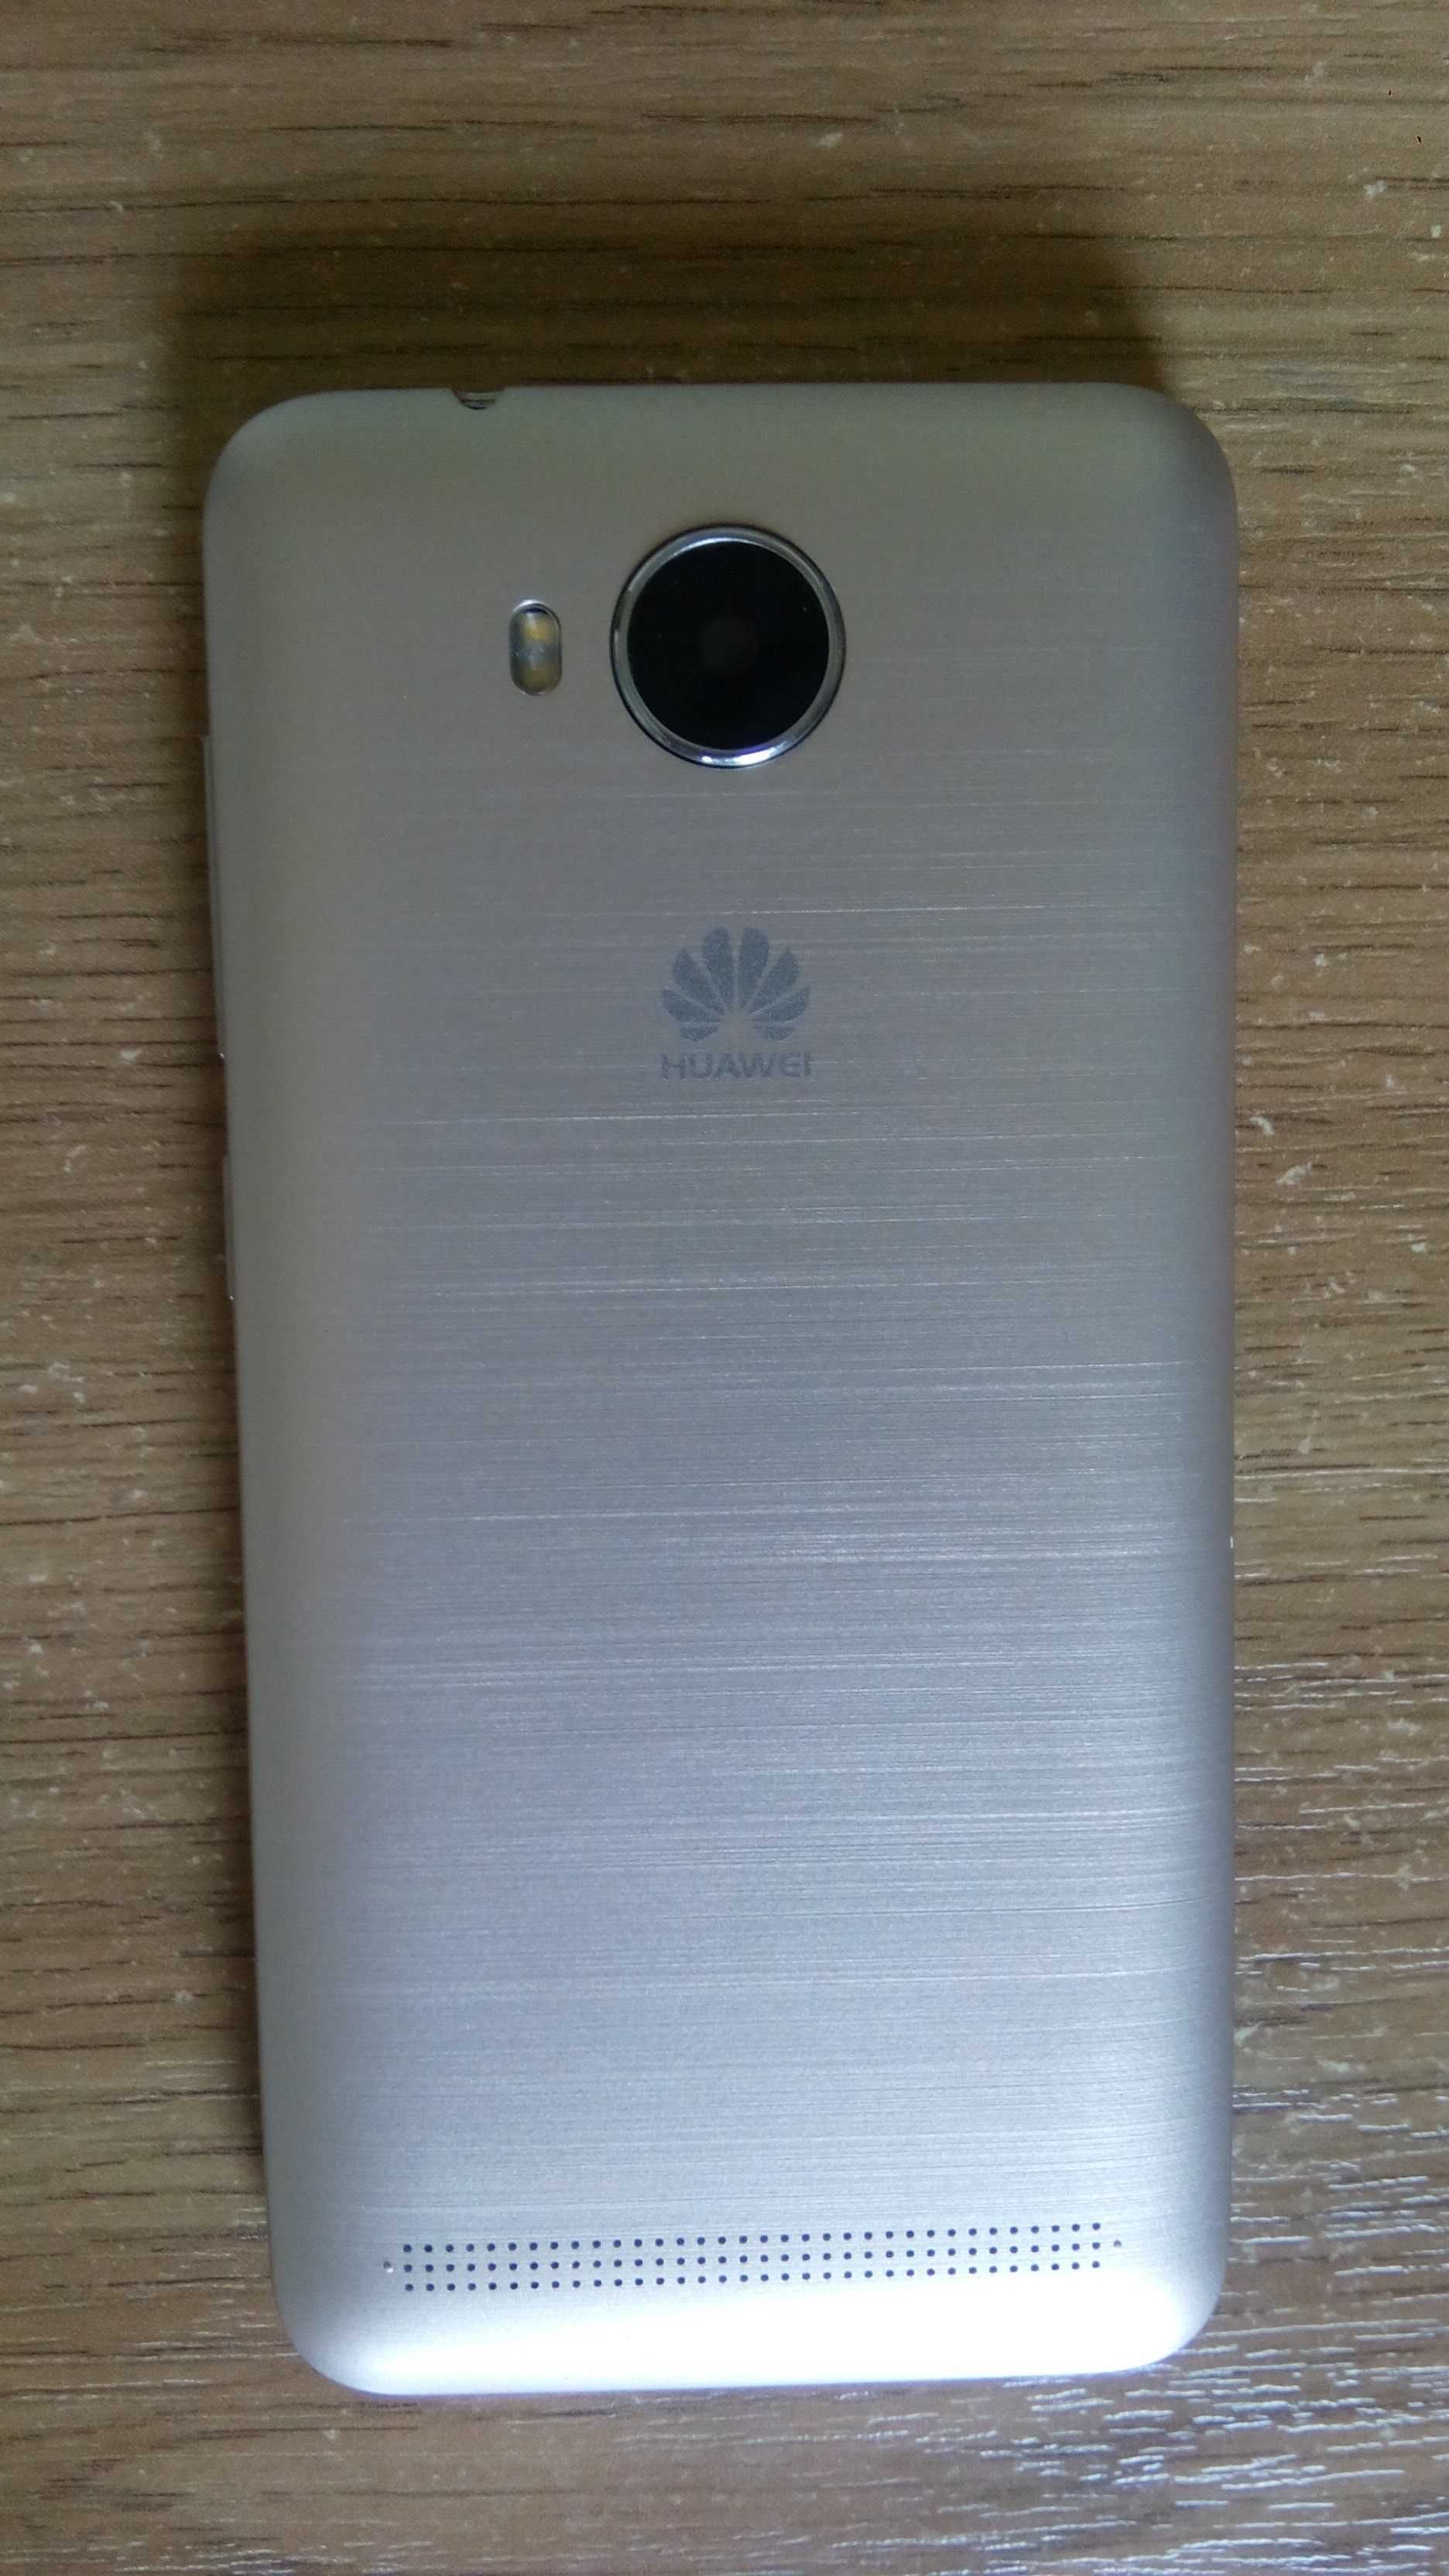 Huawei y3 ii 1/8gb (lua-u22)